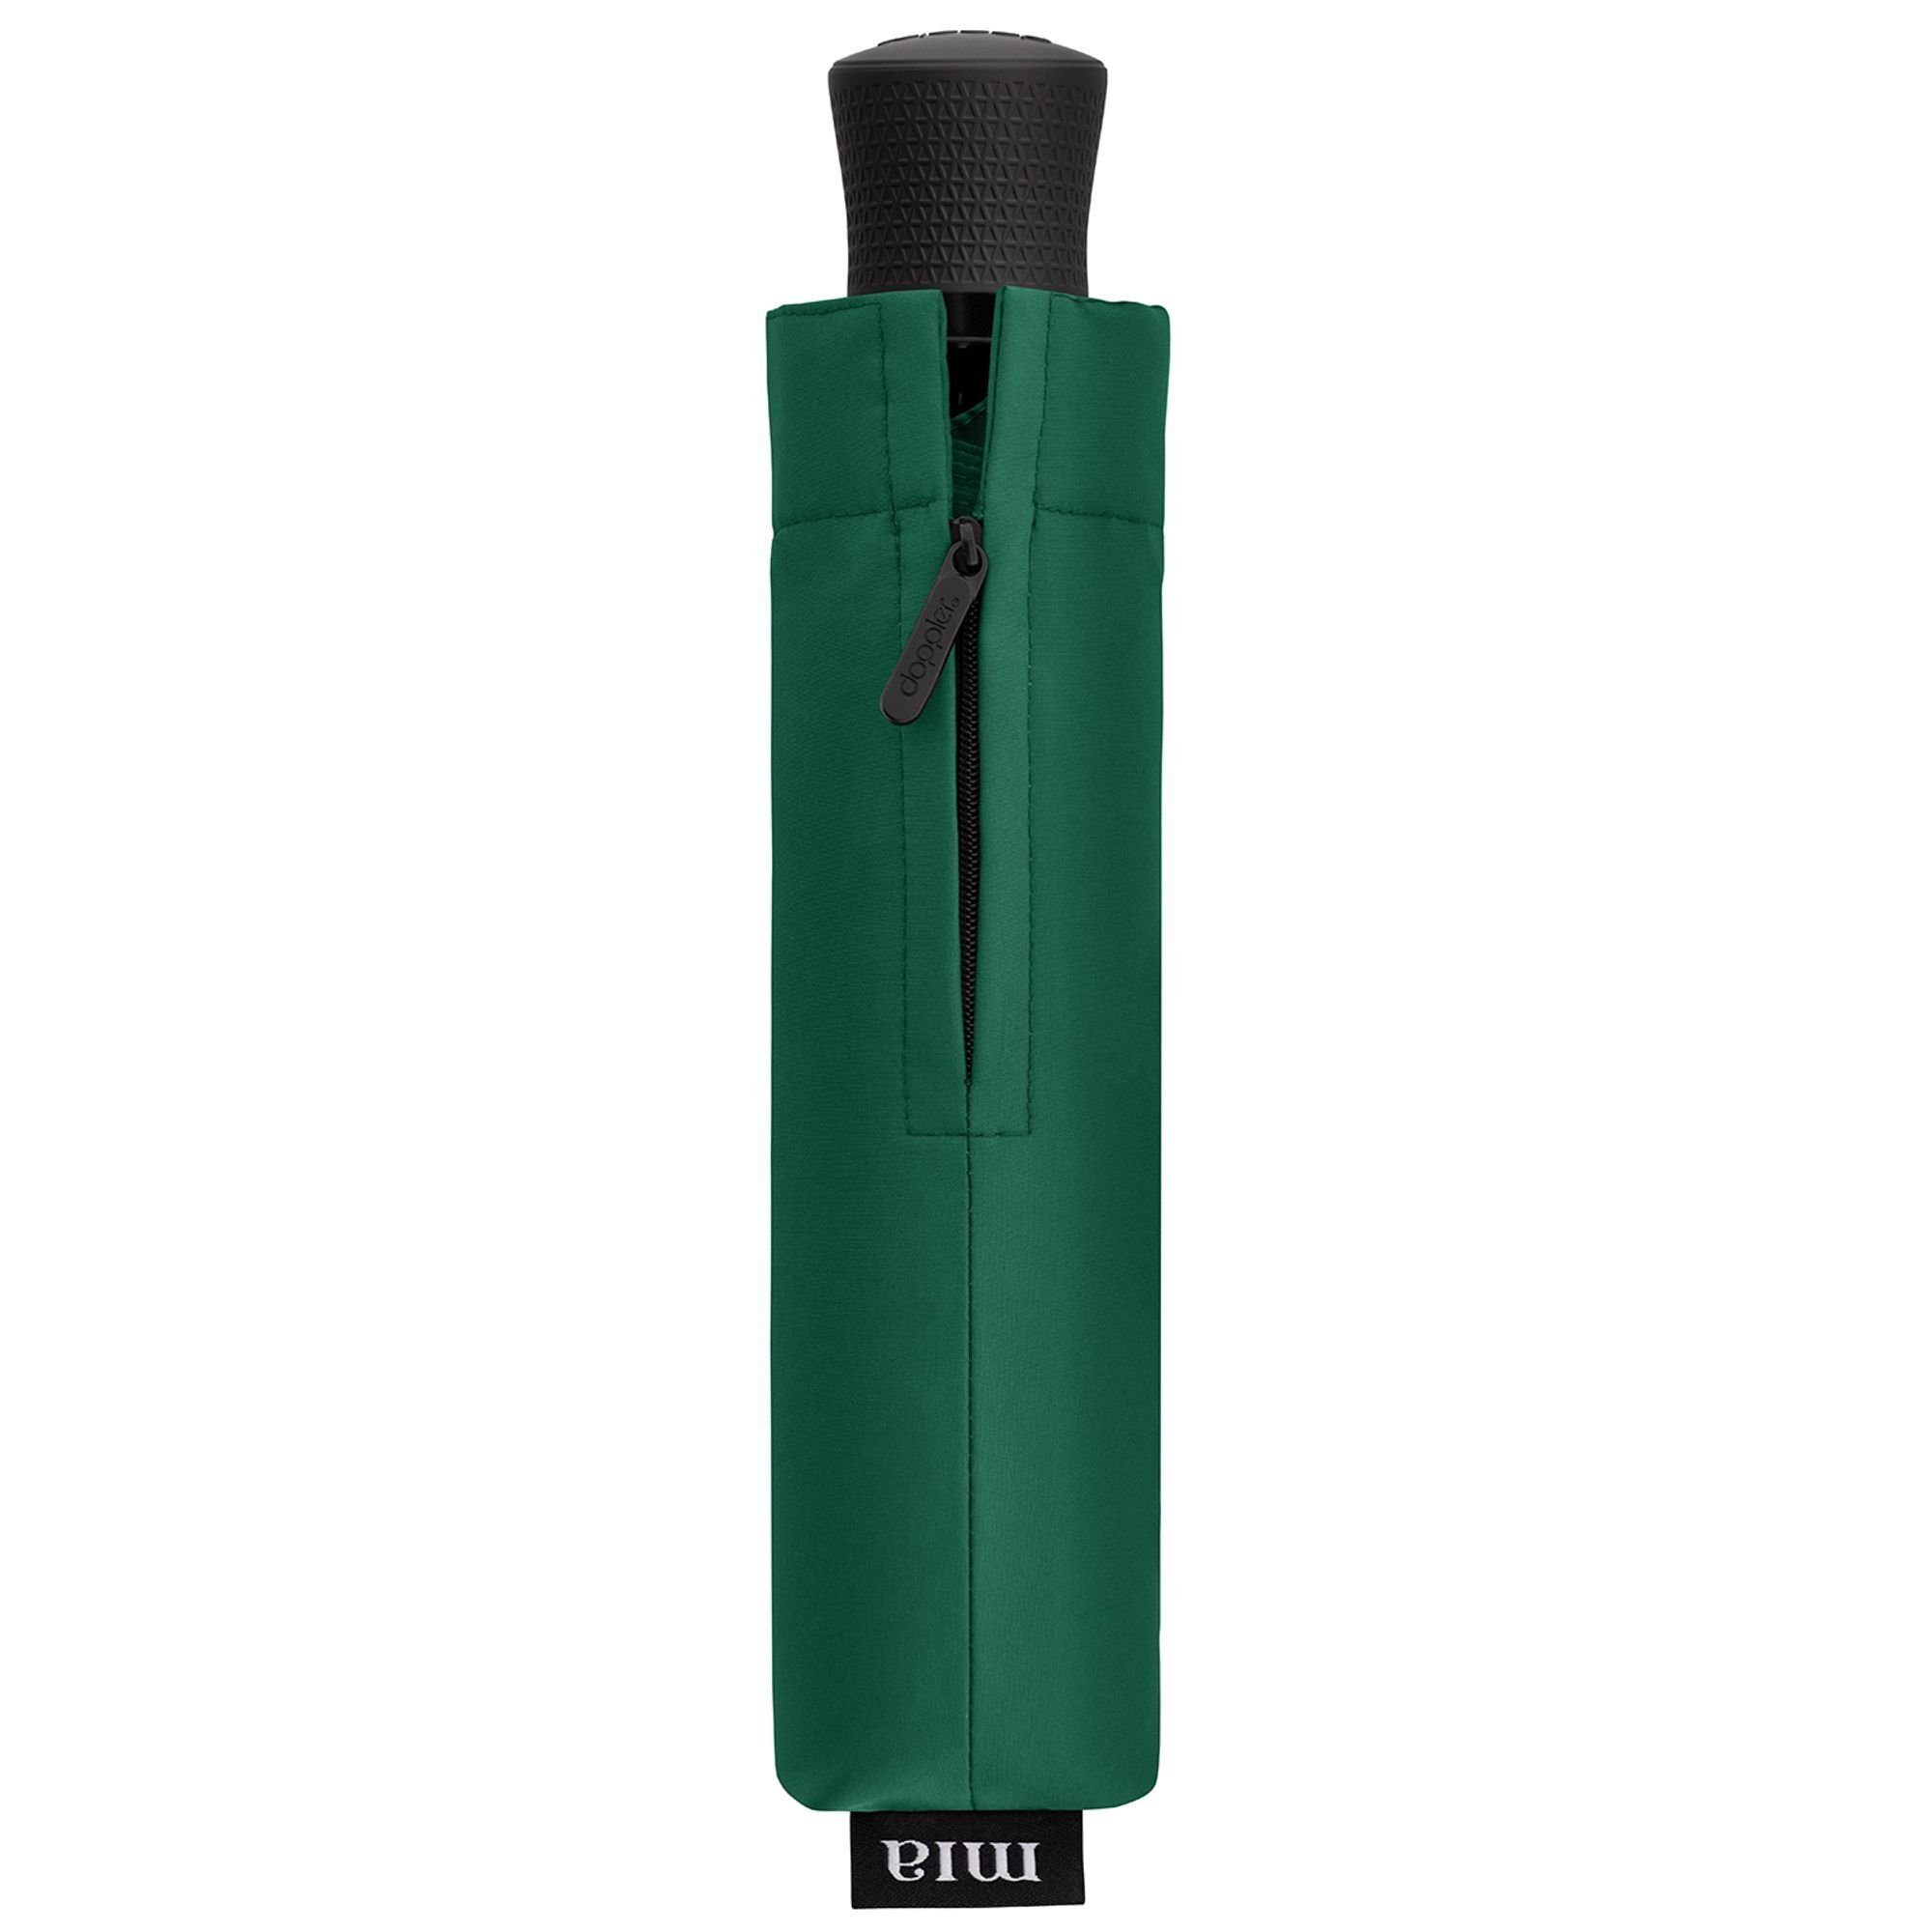 doppler® green Taschenregenschirm Mia